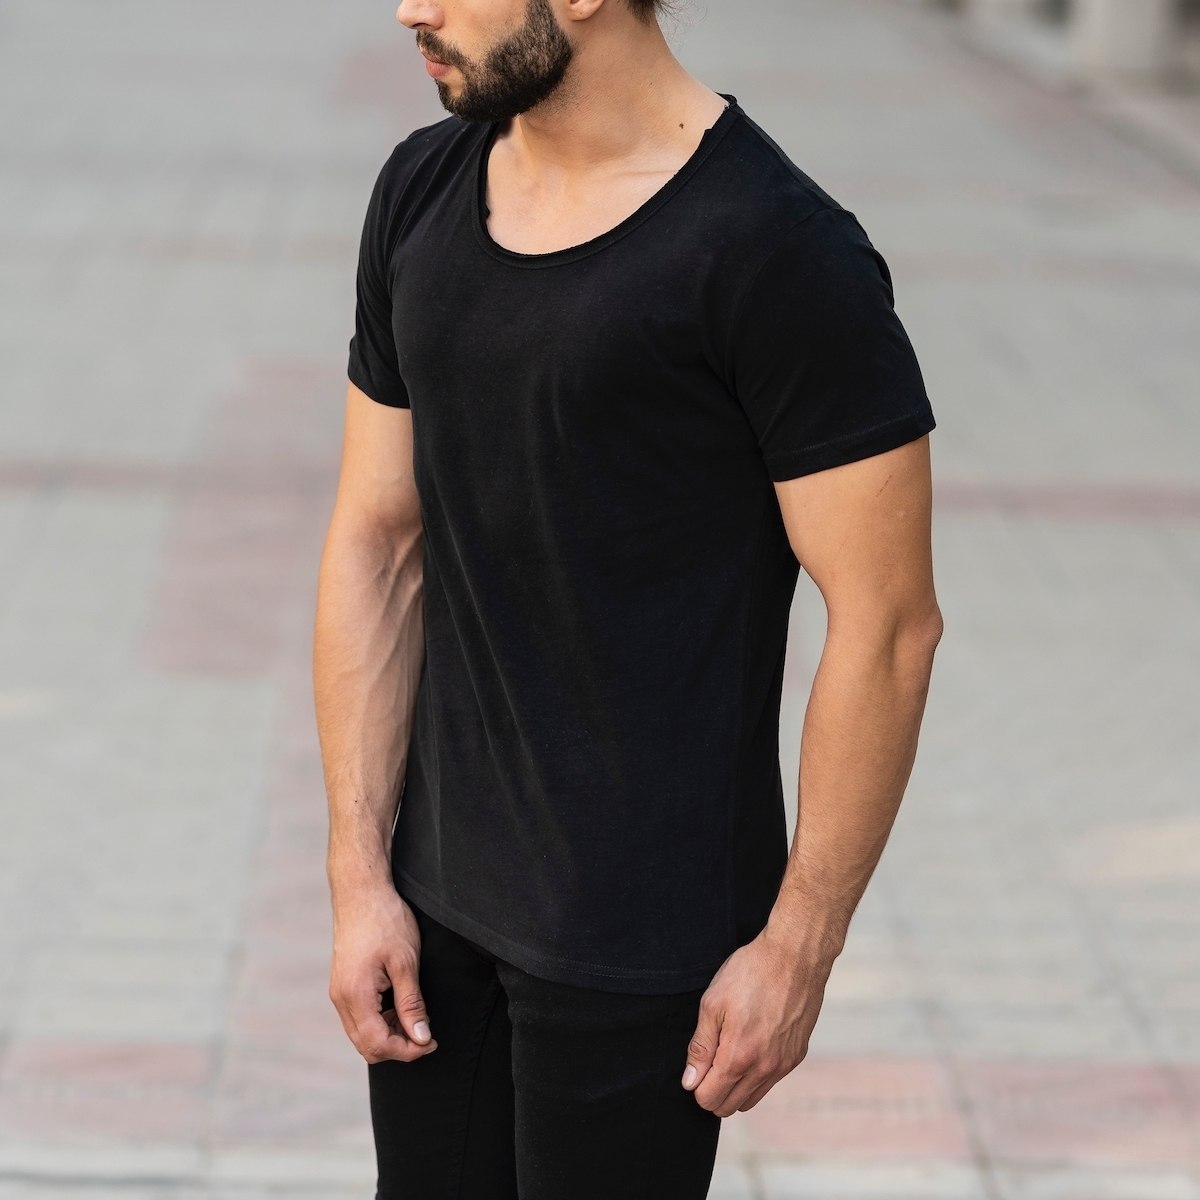 Croped Collar Black T-Shirt - 3